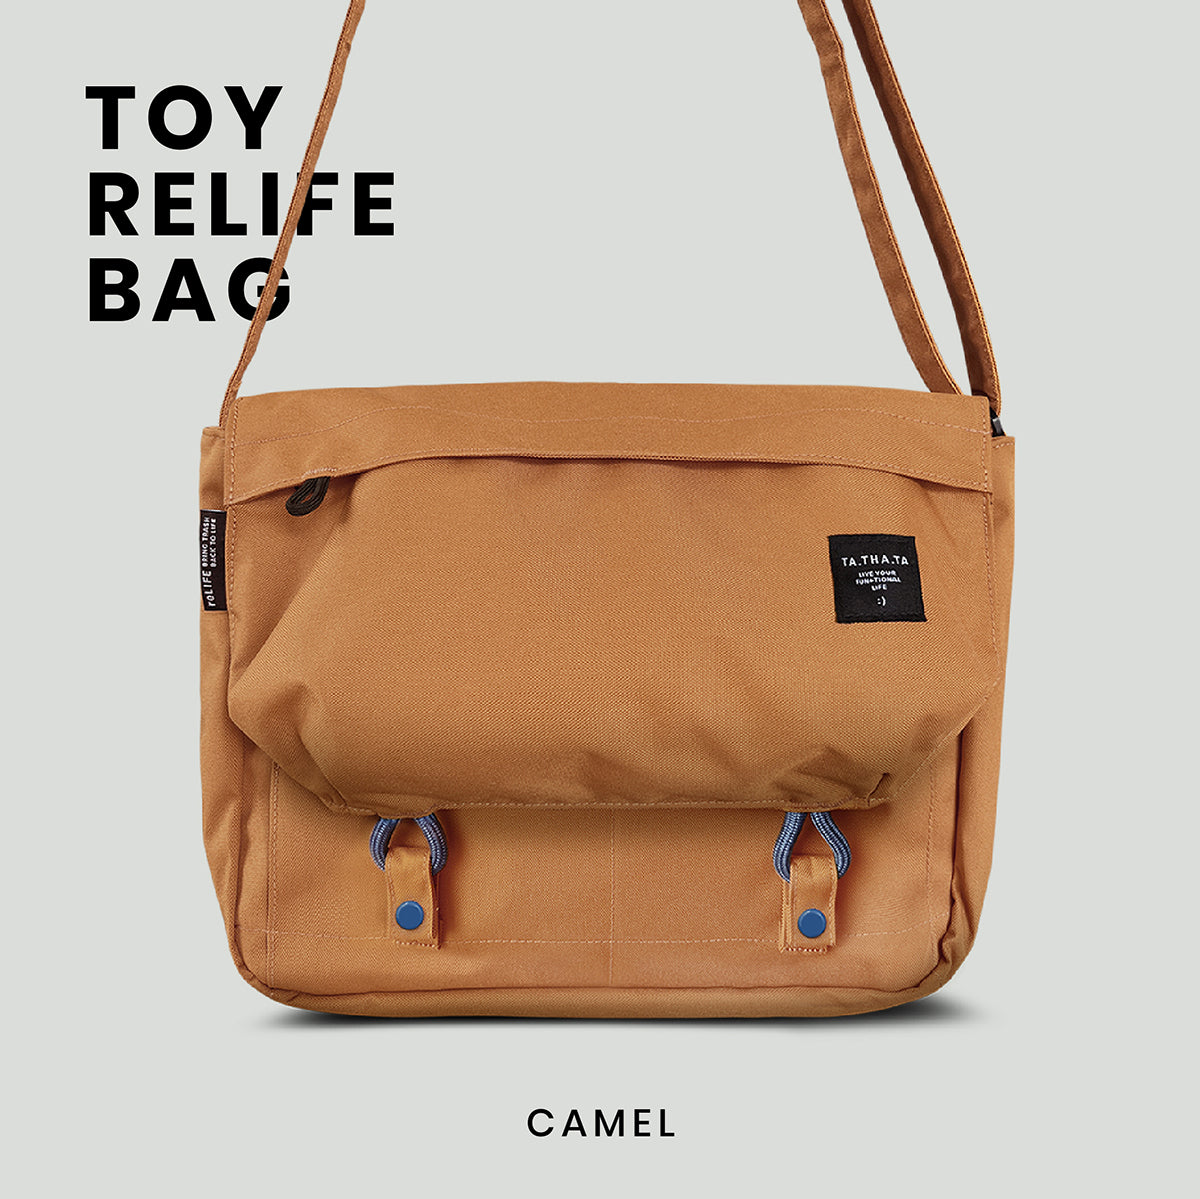 Toy relife camel bag